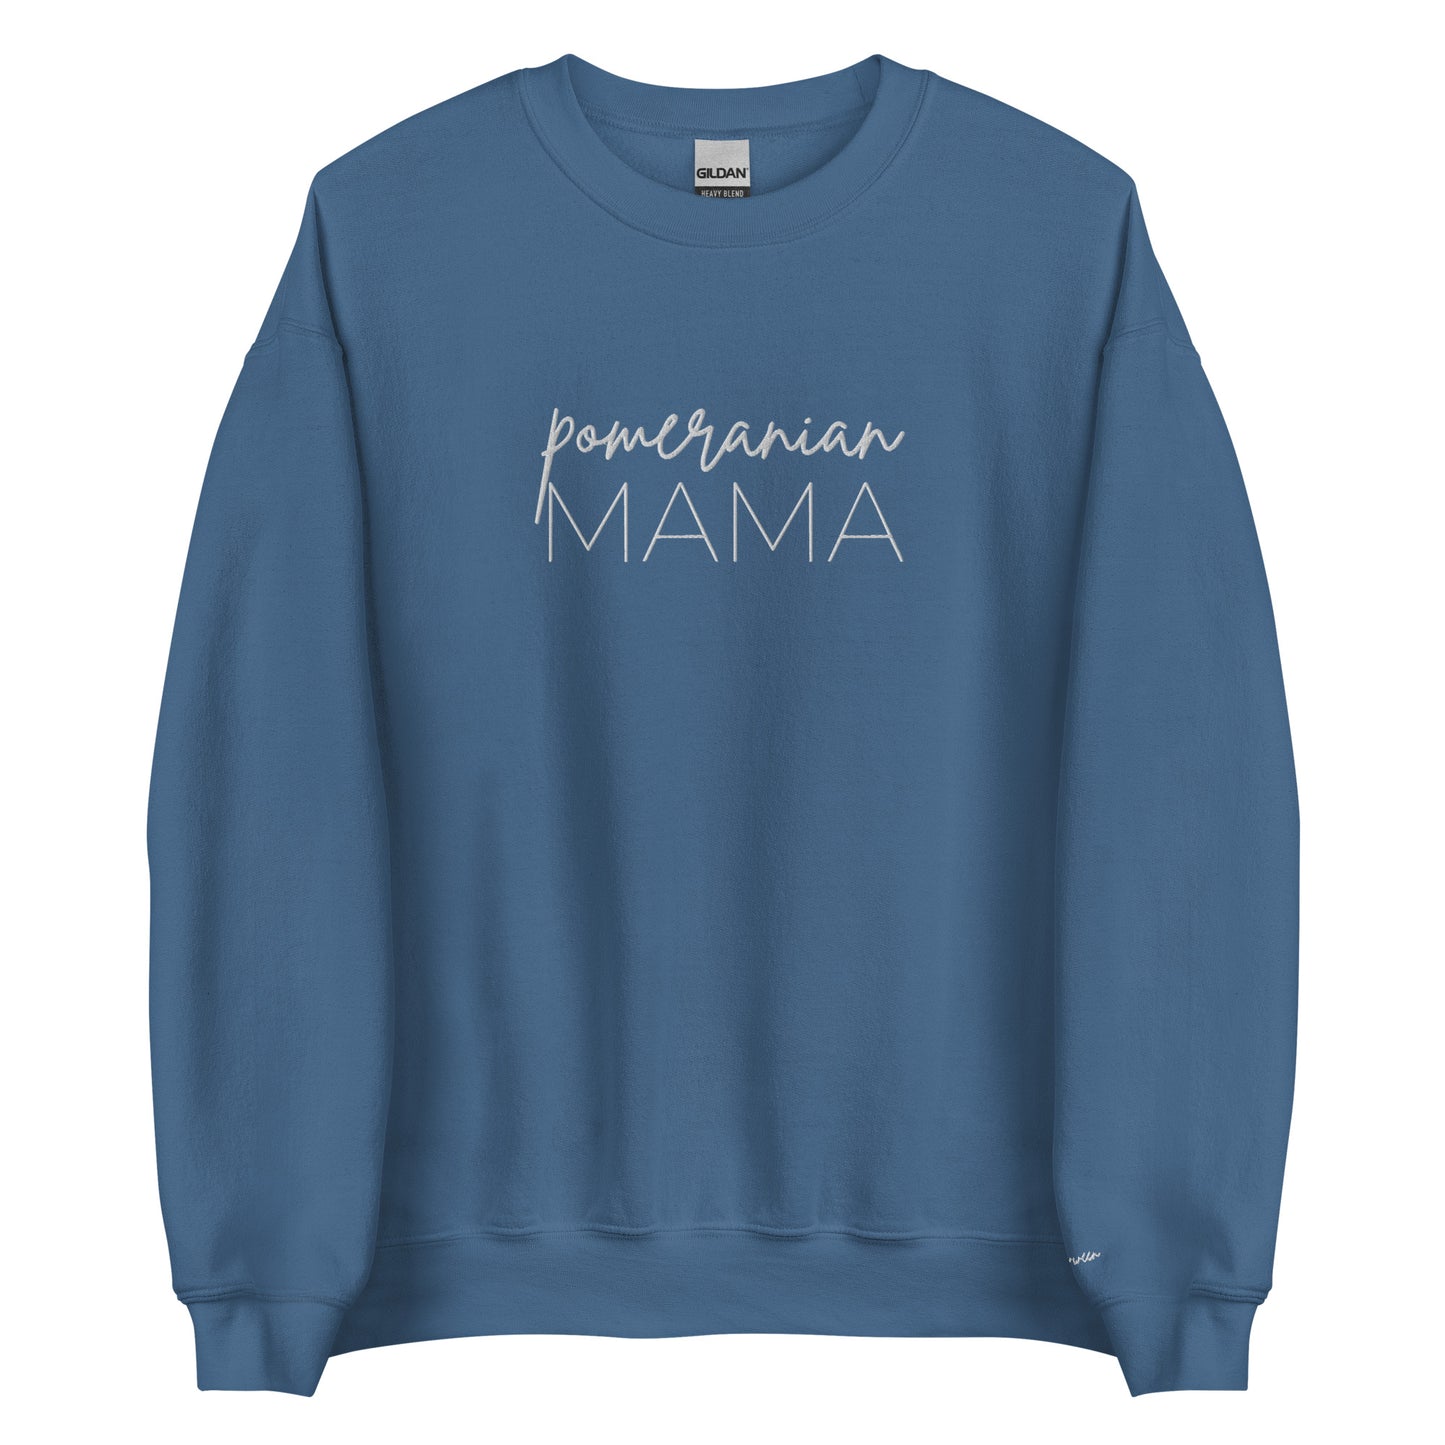 Embroidered Sweatshirt - POMERANIAN MAMA